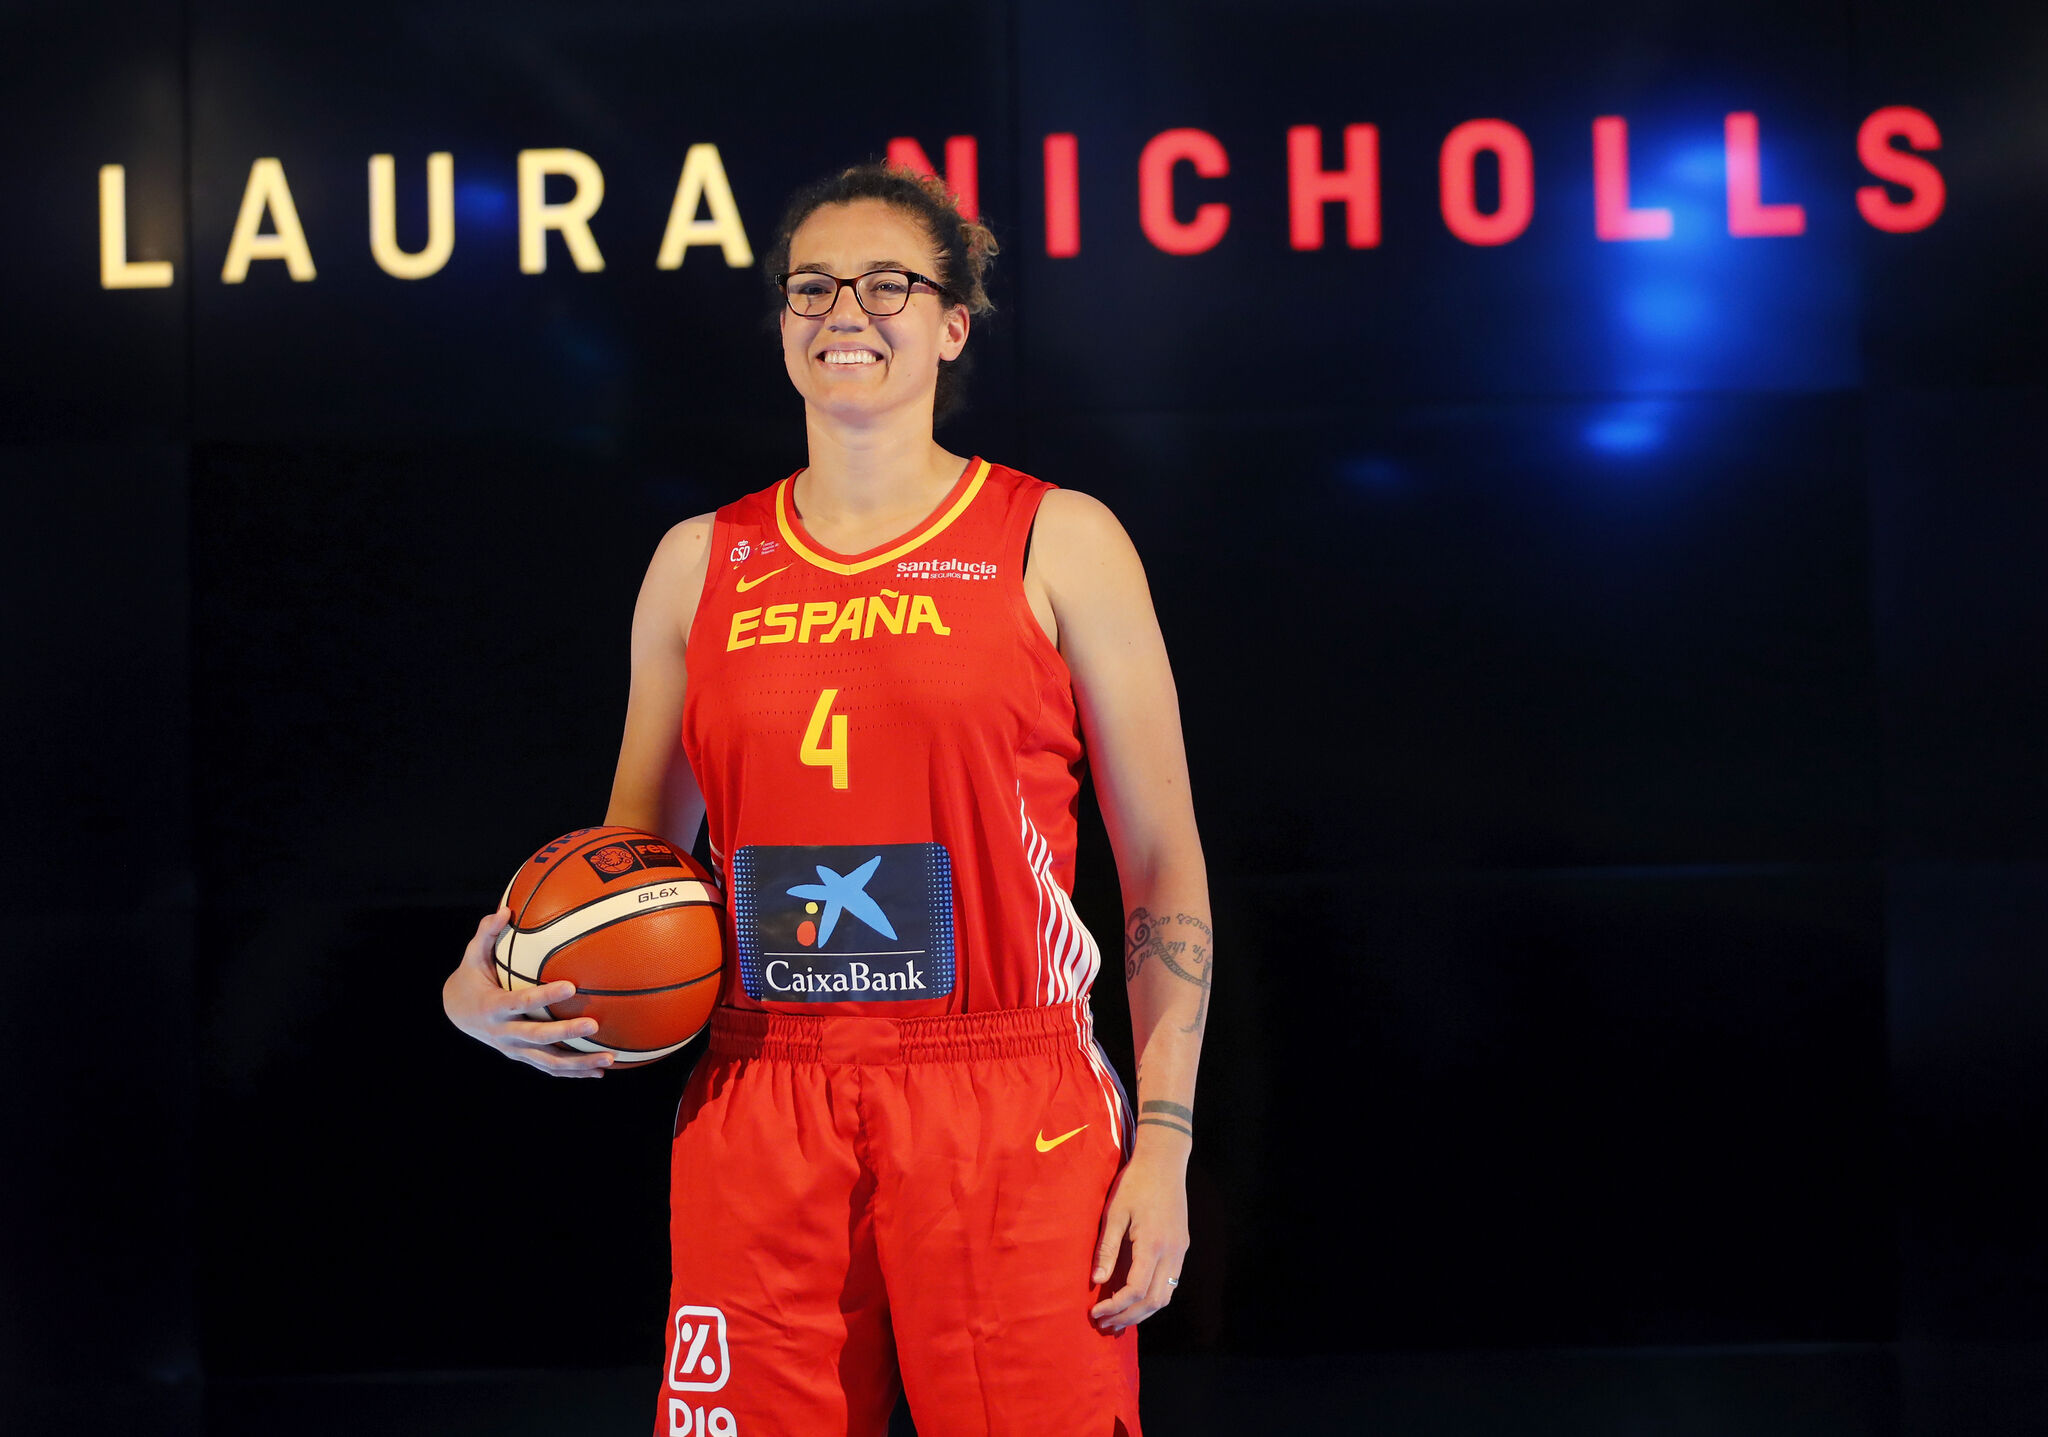 Laura Nicholls (baloncesto)